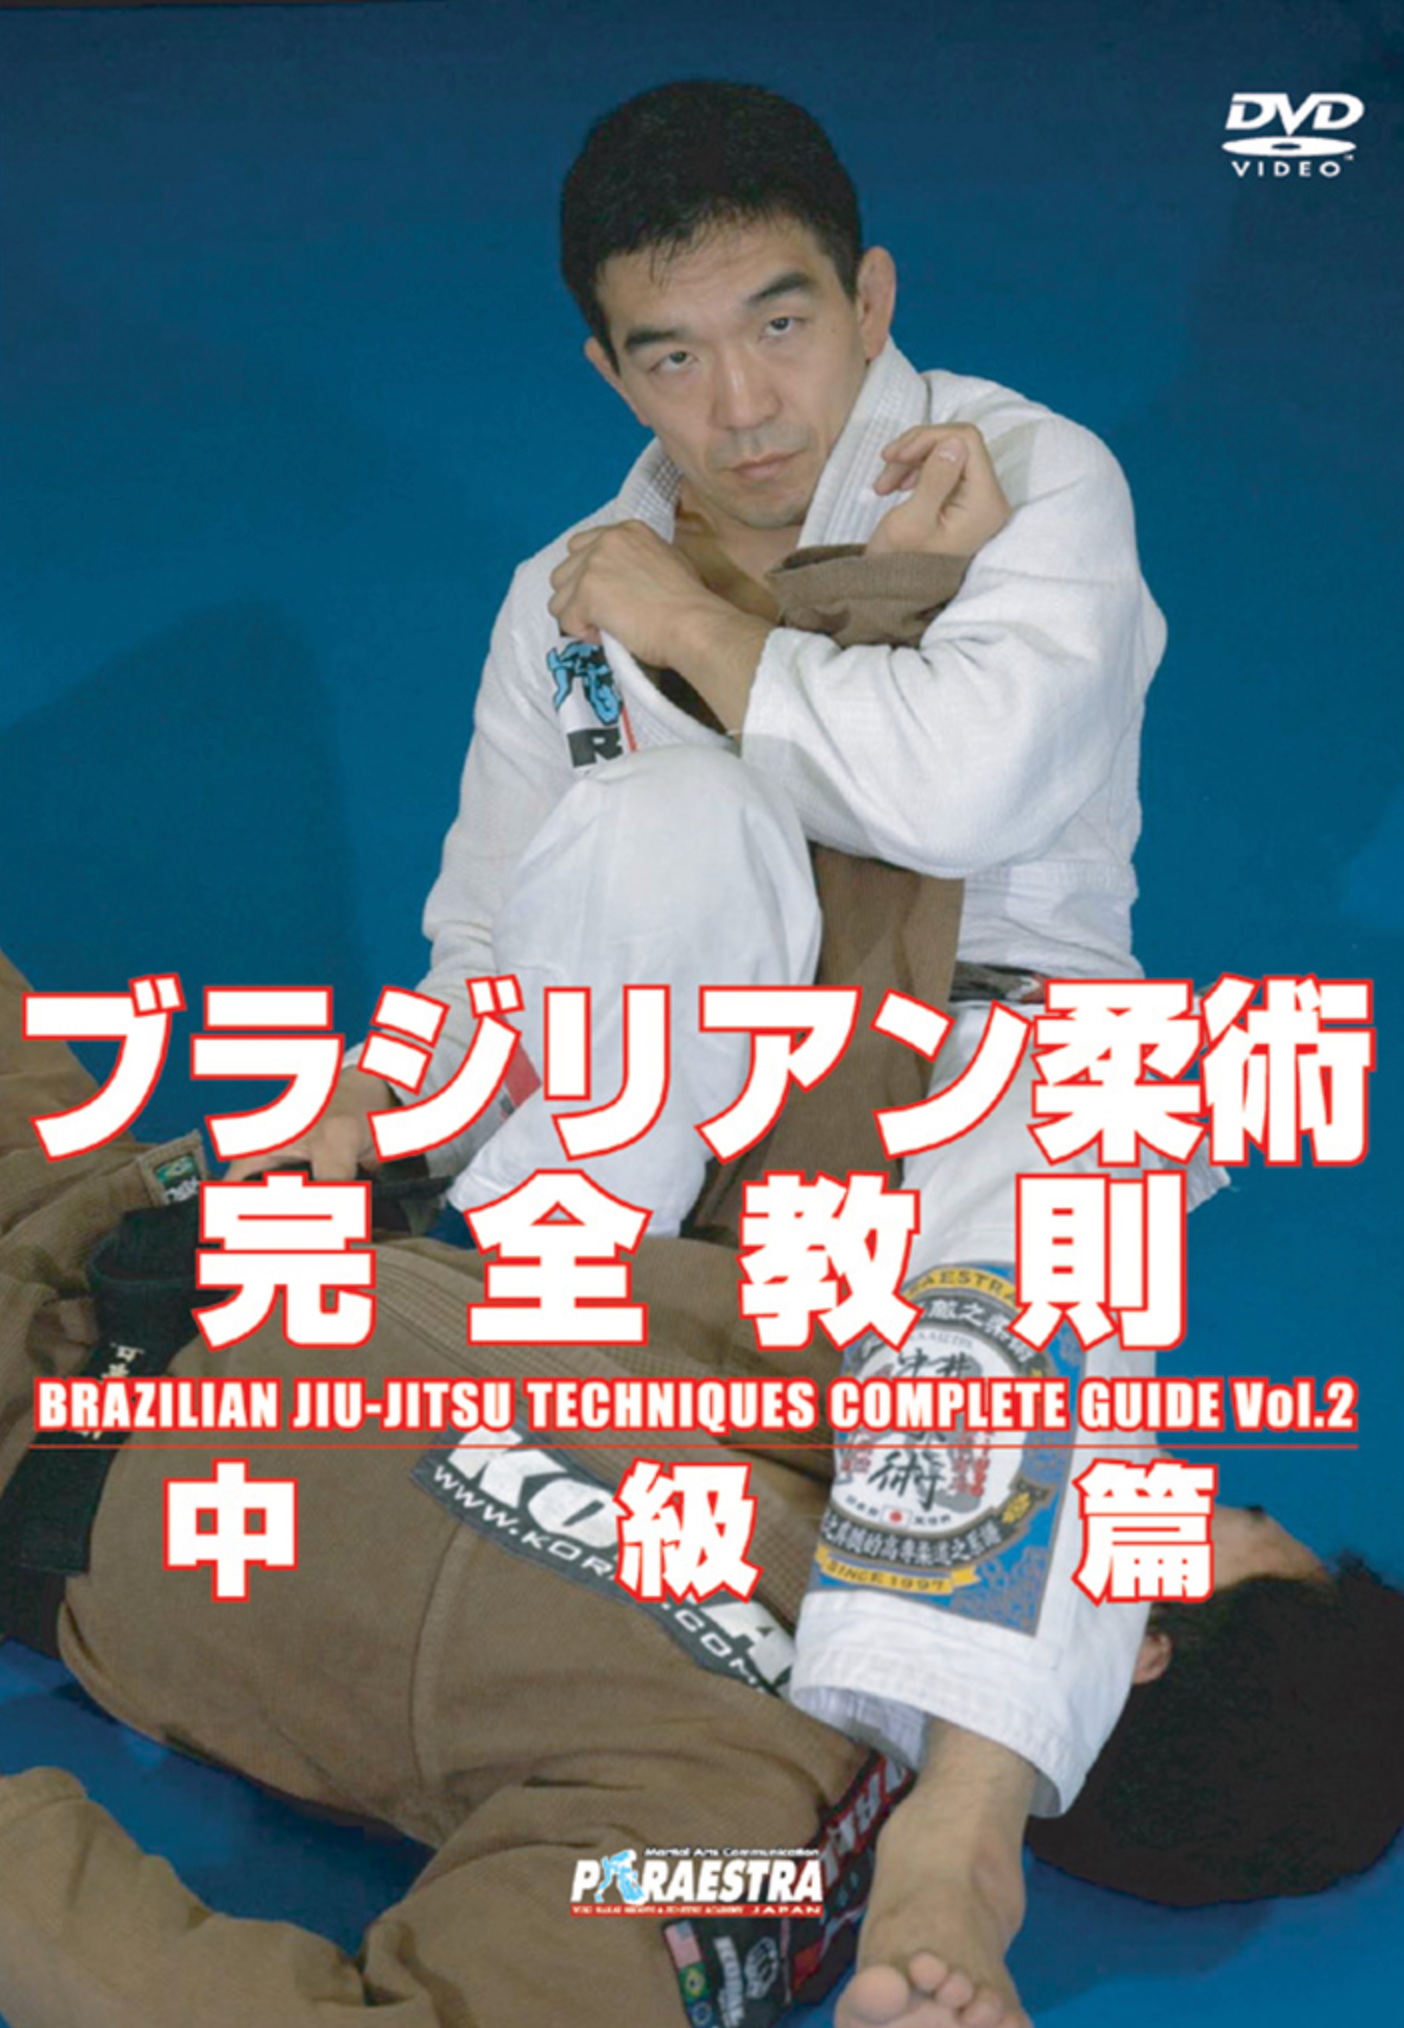 Brazilian Jiu-jitsu Complete Techniques DVD Vol 2 by Yuki Nakai - Budovideos Inc